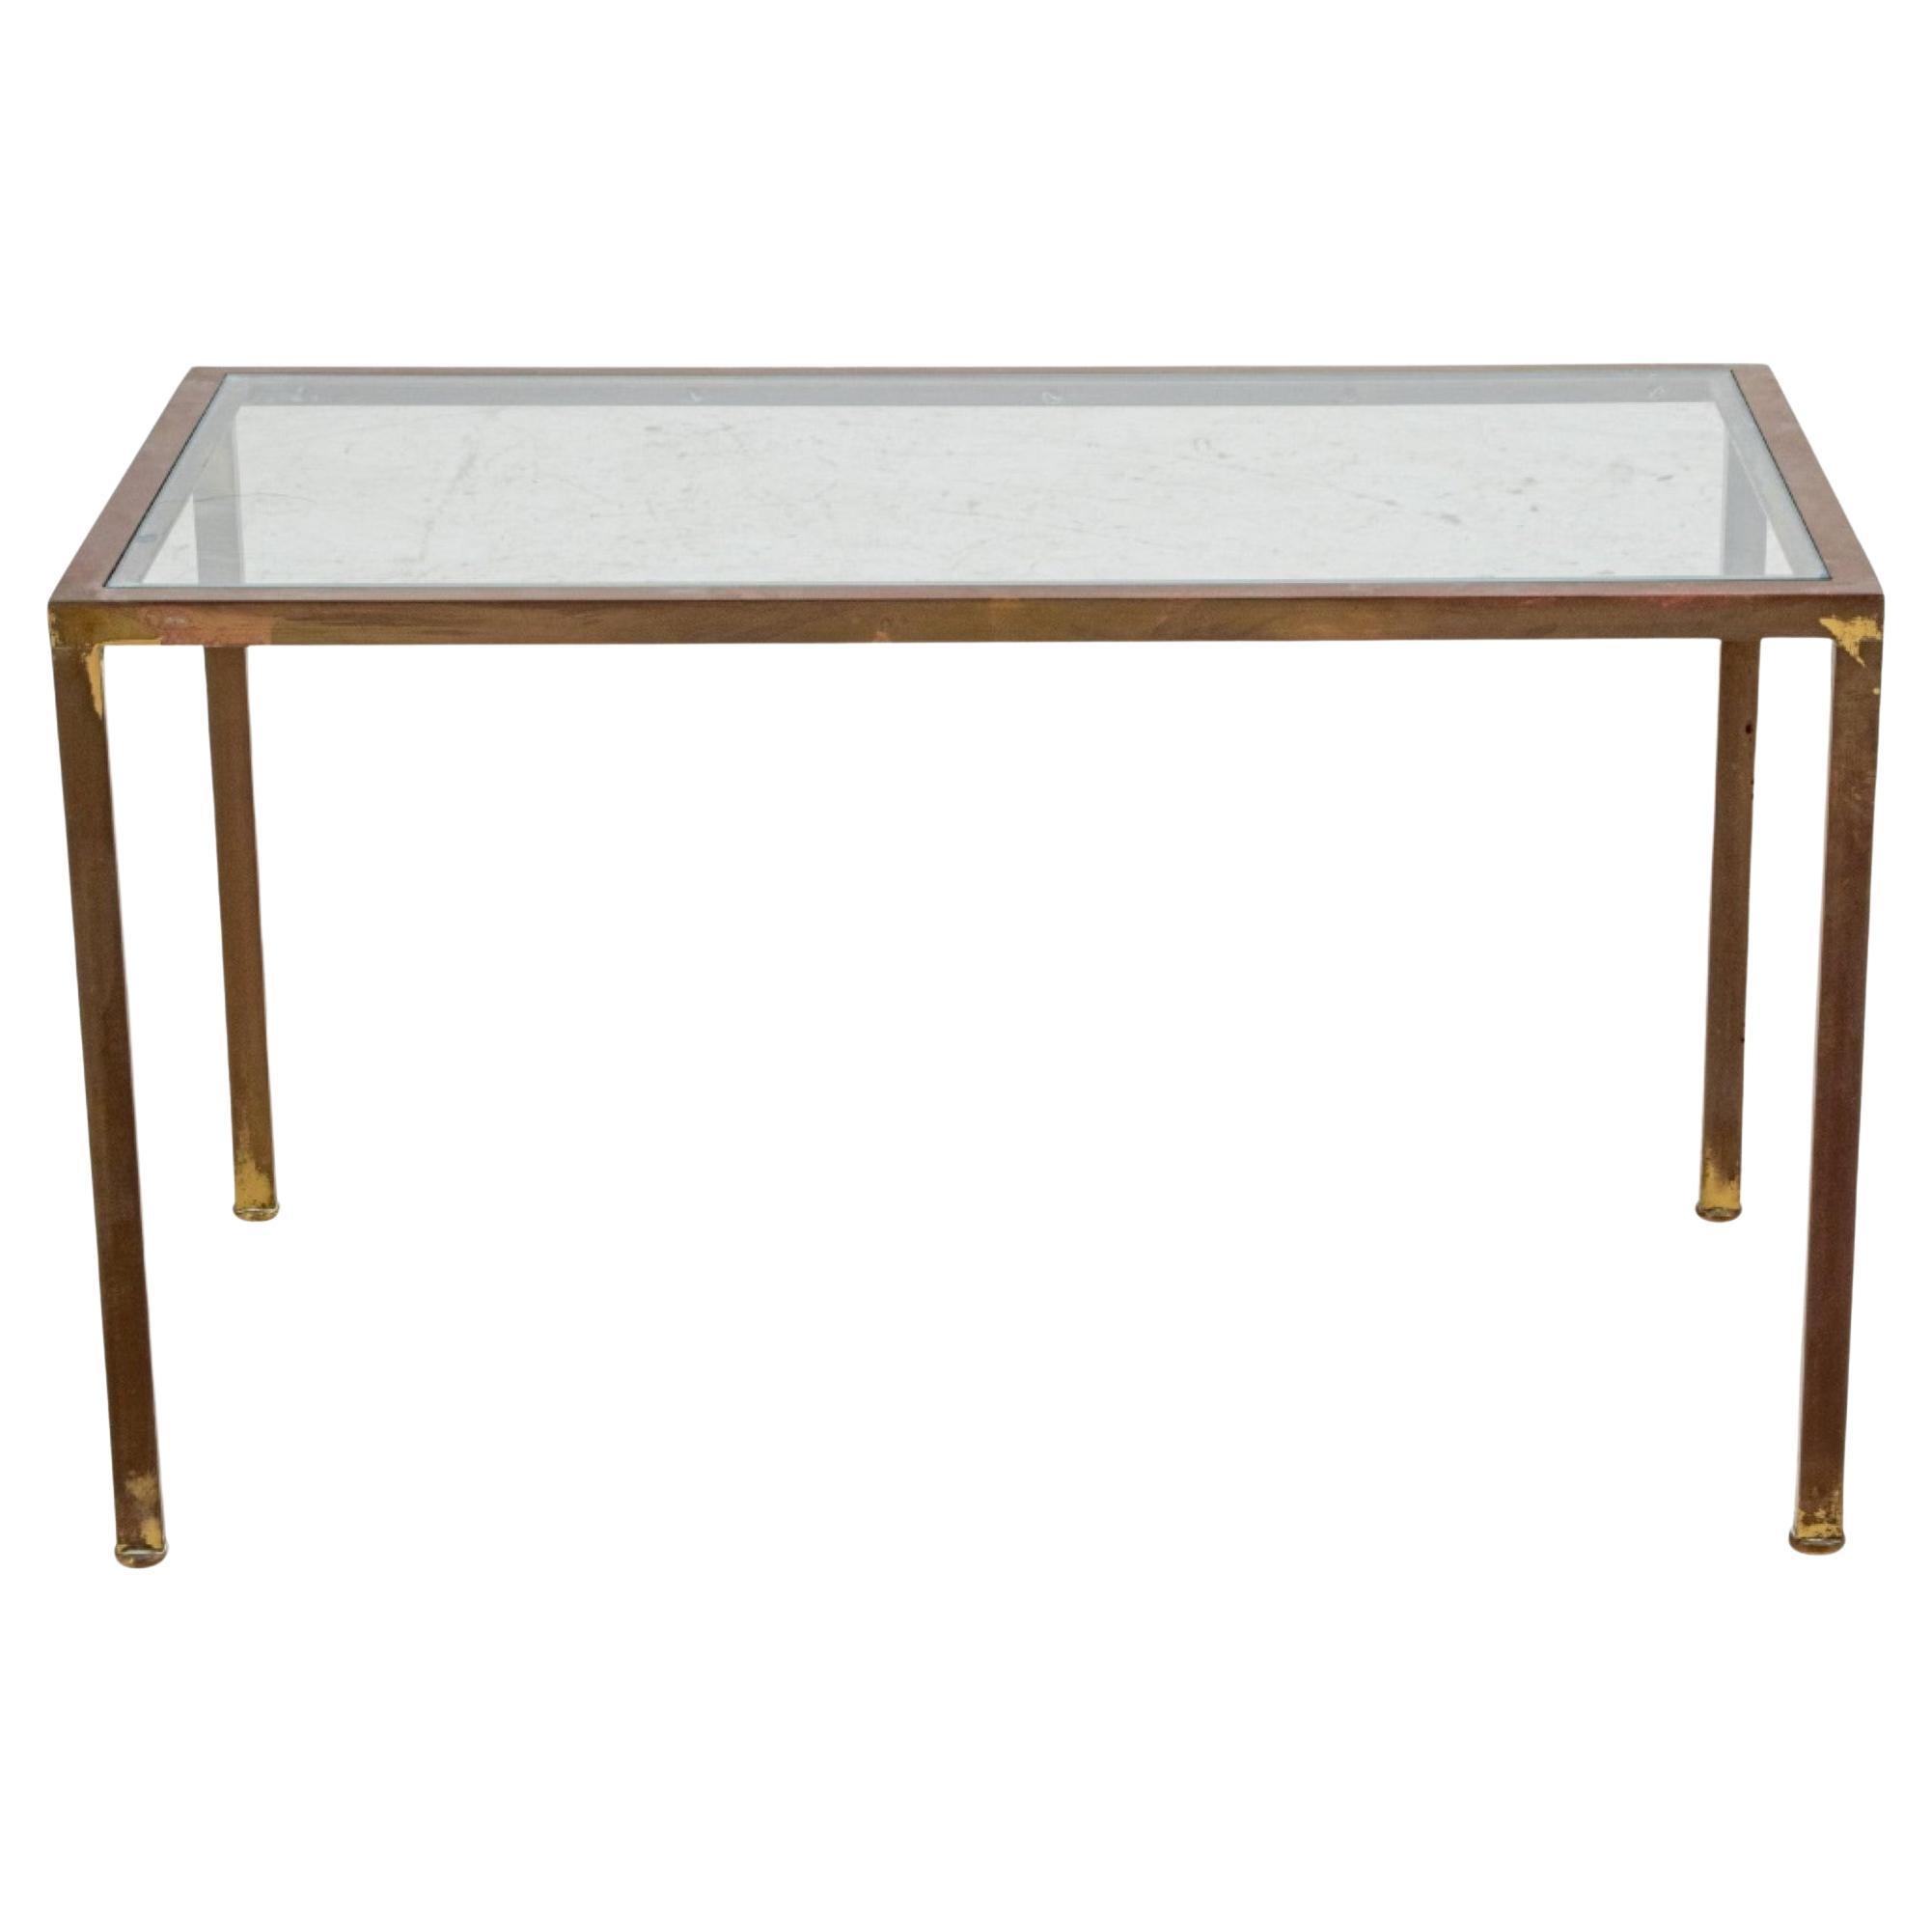 Post-Modern Gilt Metal And Glass Coffee Table For Sale